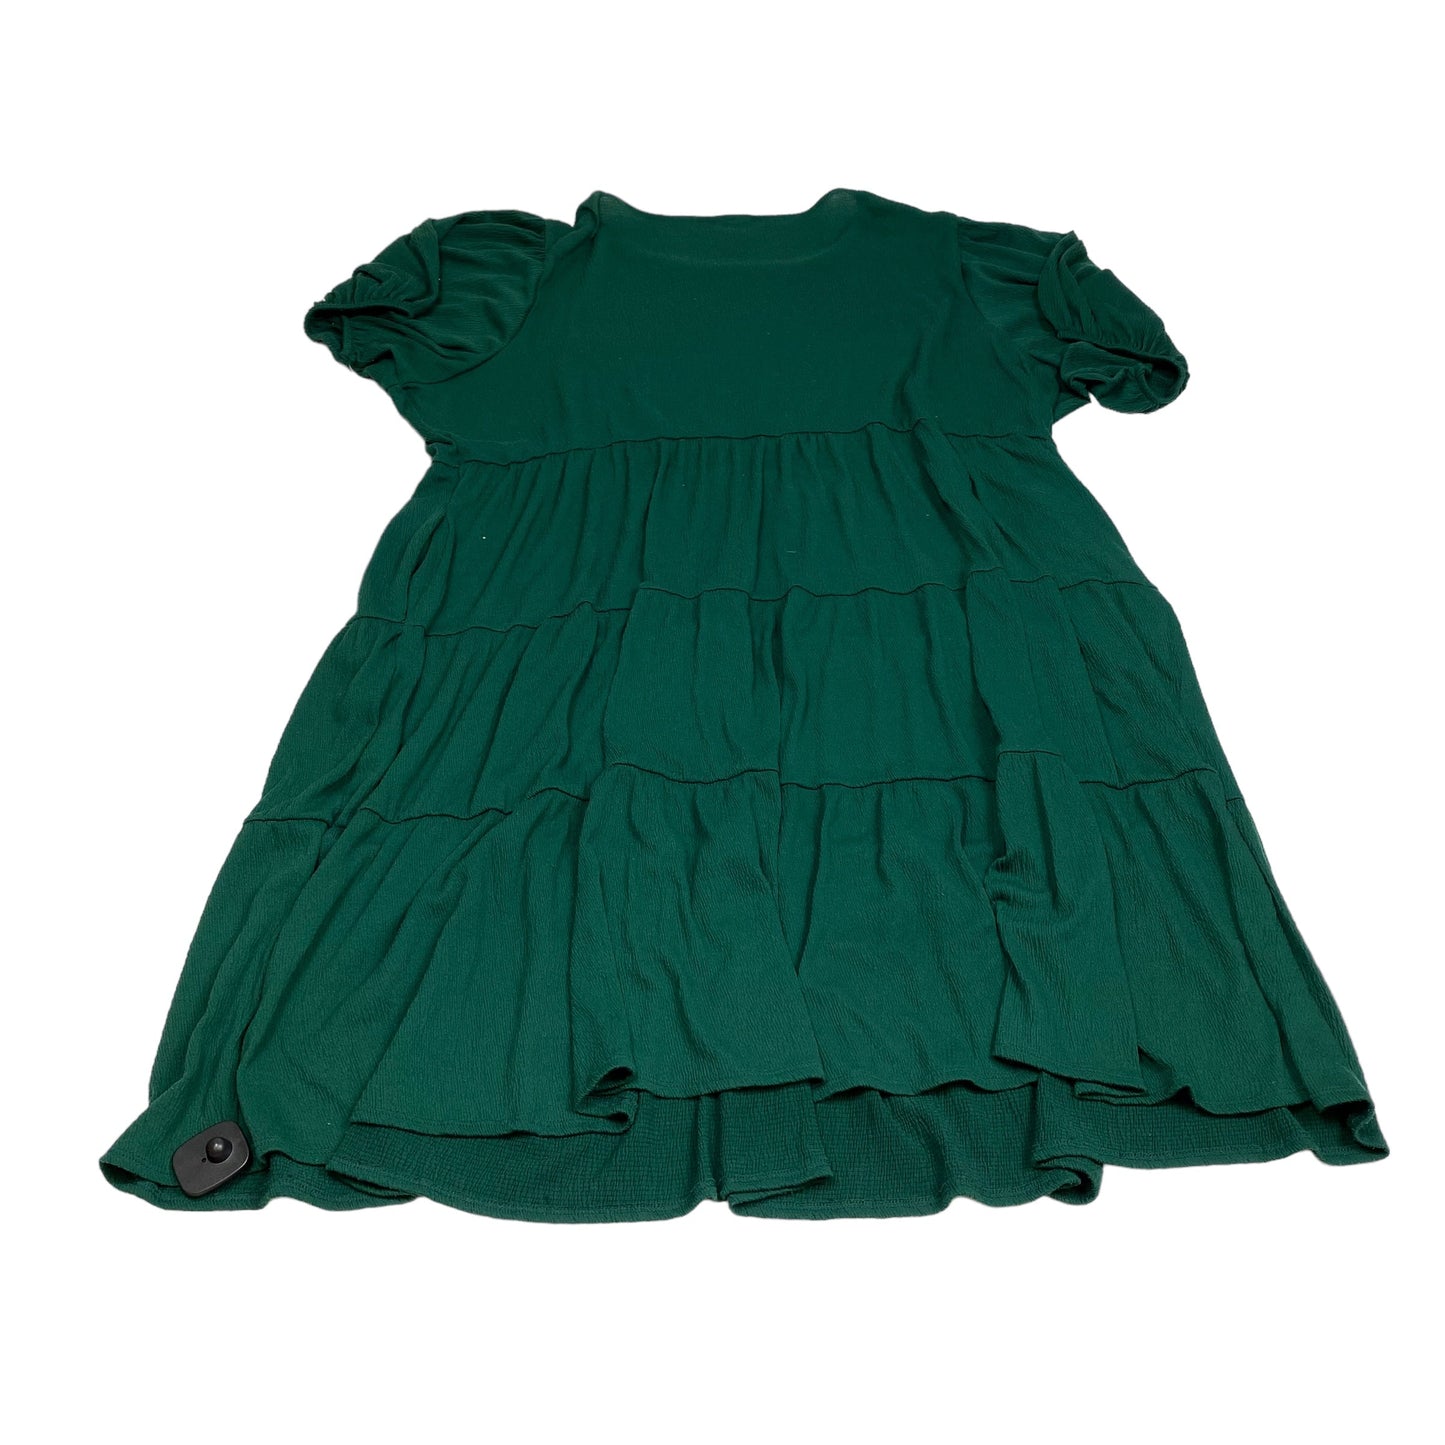 Green Dress Casual Midi Ava & Viv, Size 3x